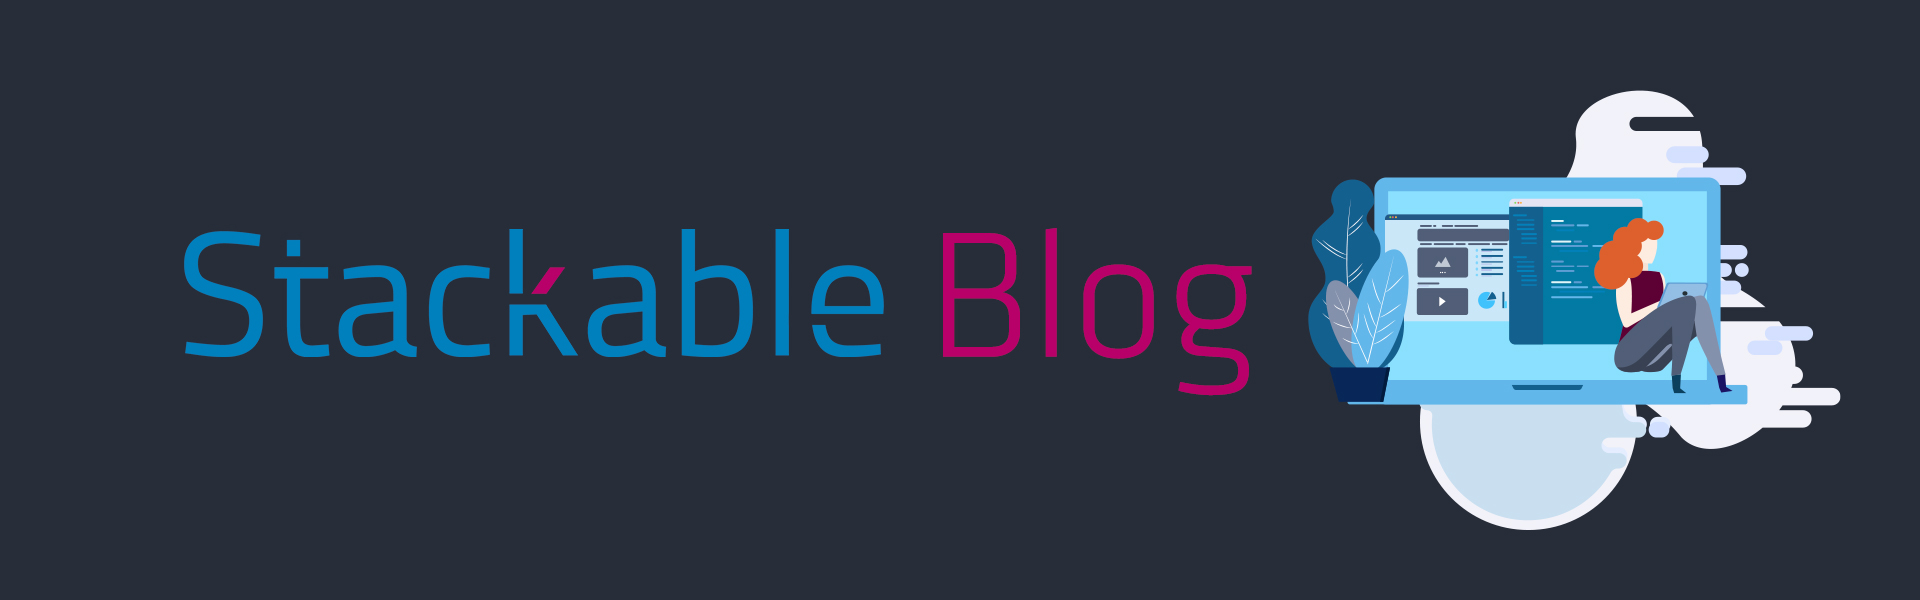 stackable-blog-header-dunkelgrau